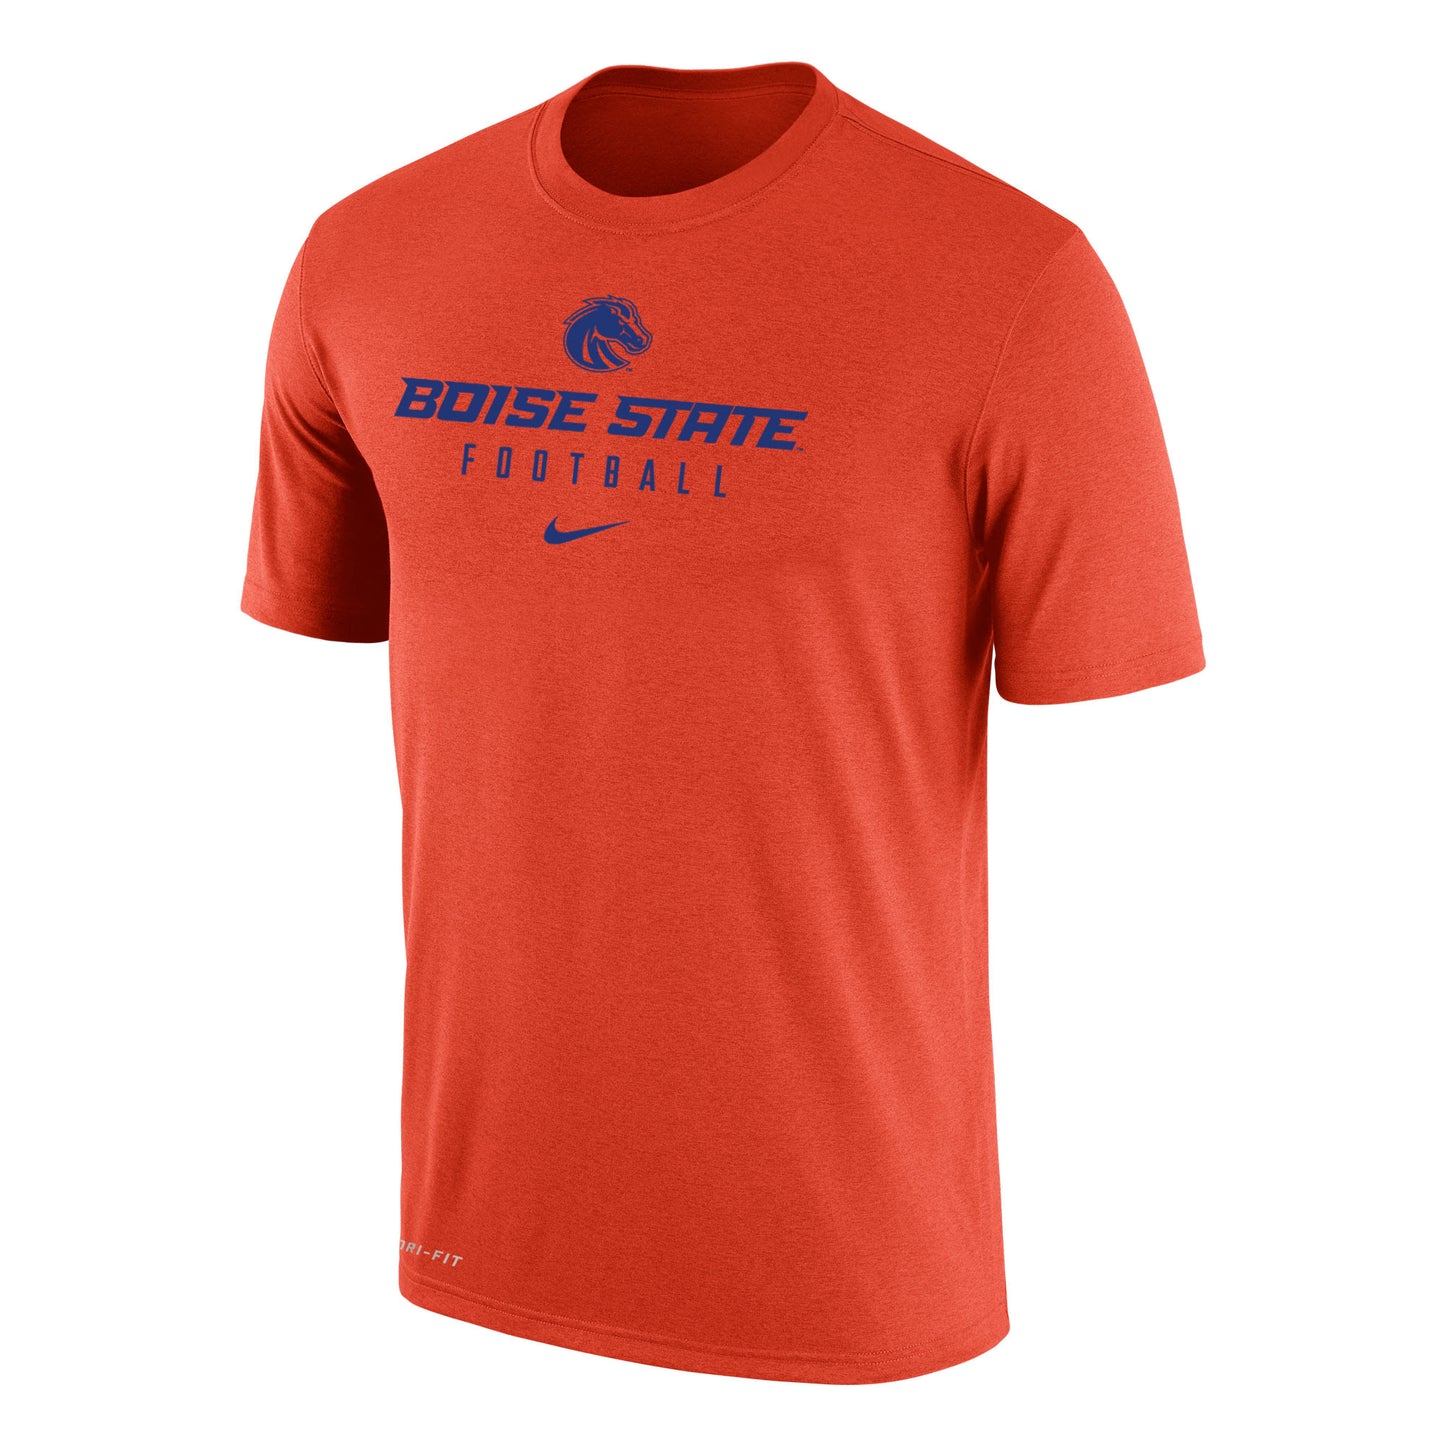 Boise State Broncos Nike Men's "Football" Dri-Fit Cotton T-Shirt (Orange)